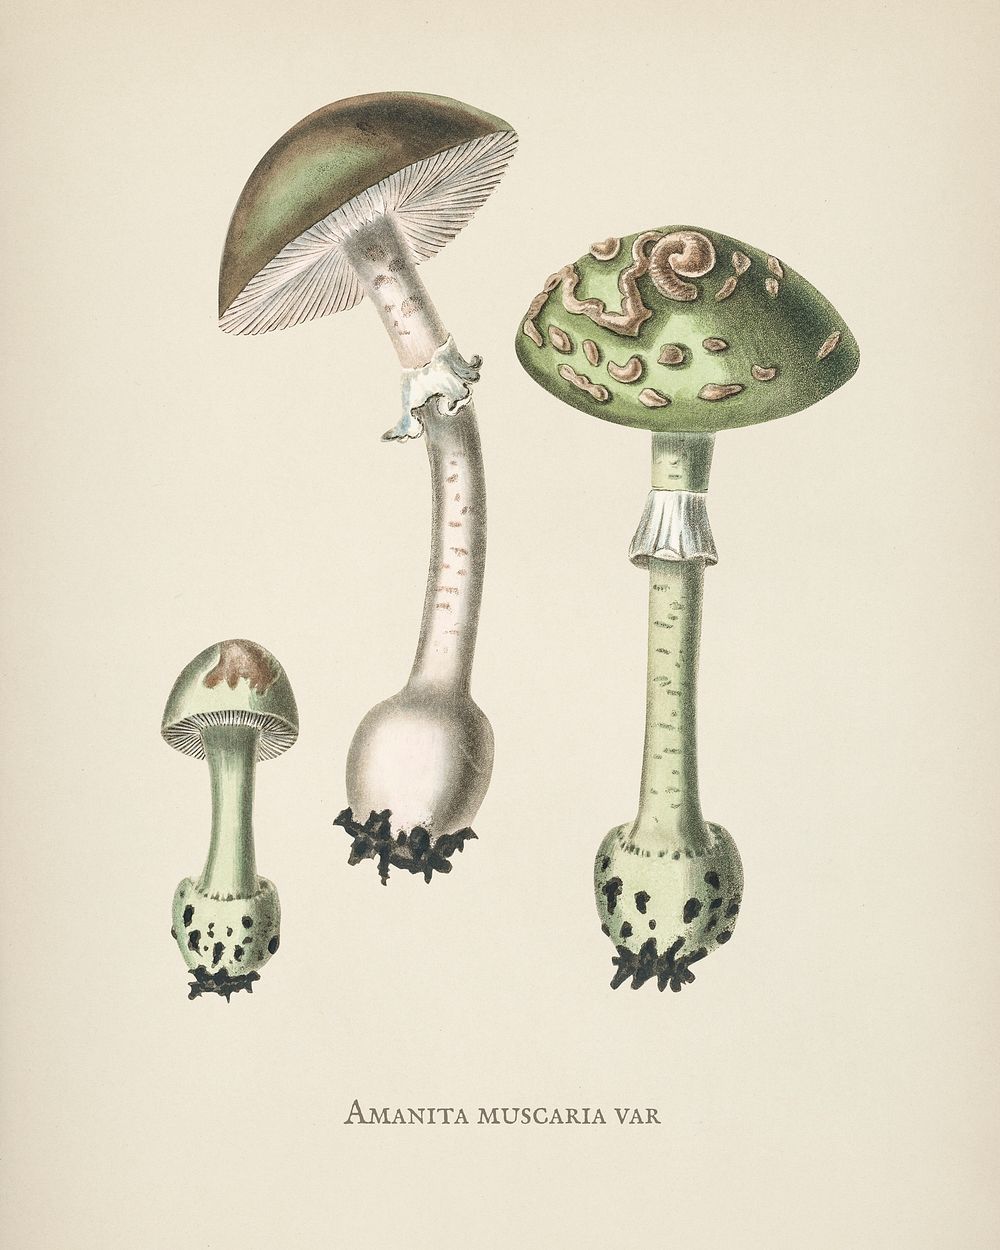 Amanita muscaria var illustration from Medical Botany (1836) by John Stephenson and James Morss Churchill.